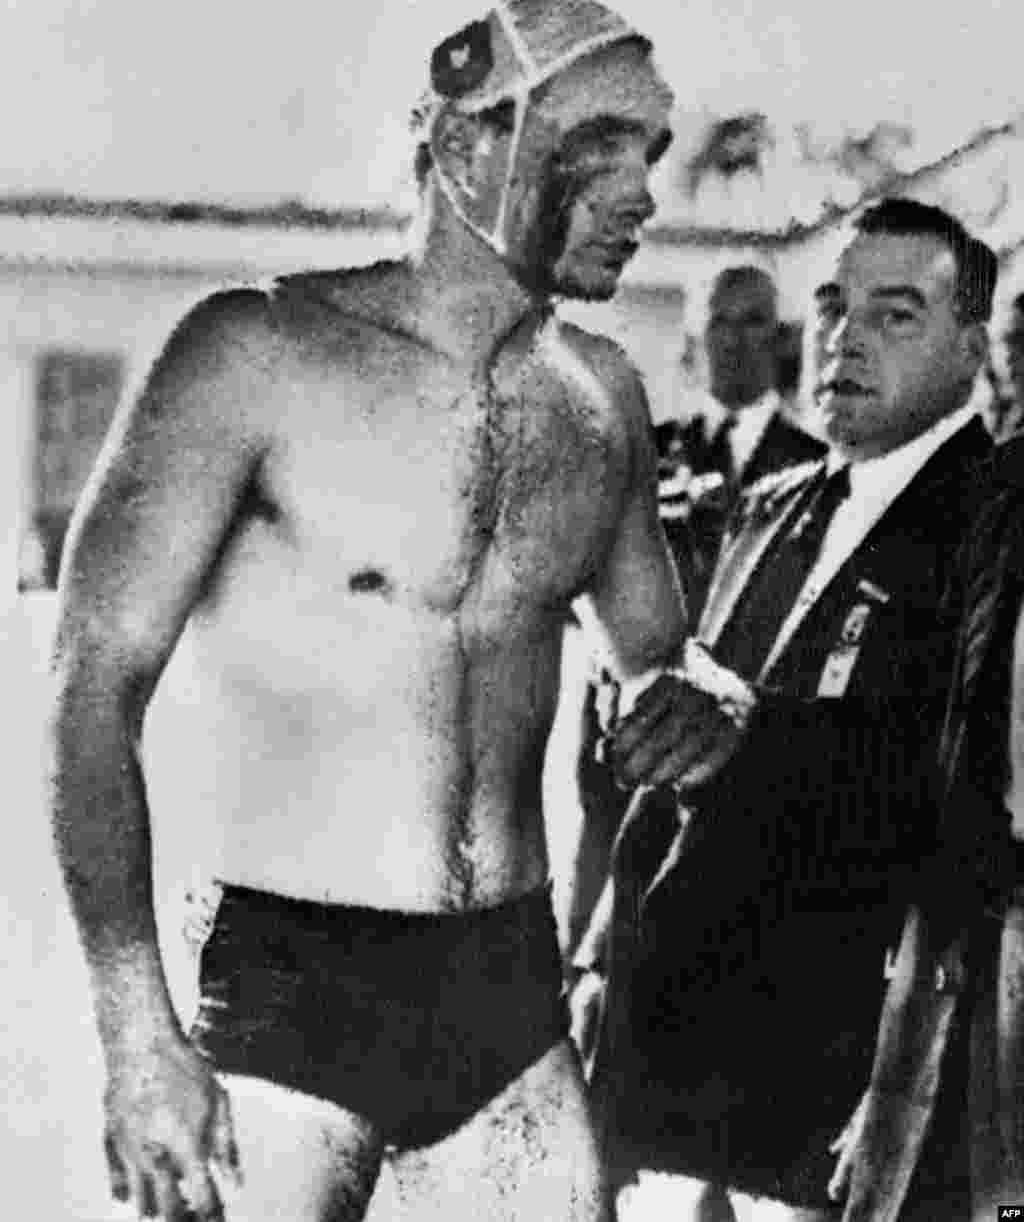 Mađarski vaterpolo igrač Ervin Zador nakon polufinalne utakmice protiv SSSR-a na olimpijskim igrama u Melbournu, 1956. neposredno nakon invazije Mađarske od strane SSSR-a. Mađari su osvojili zlato. 